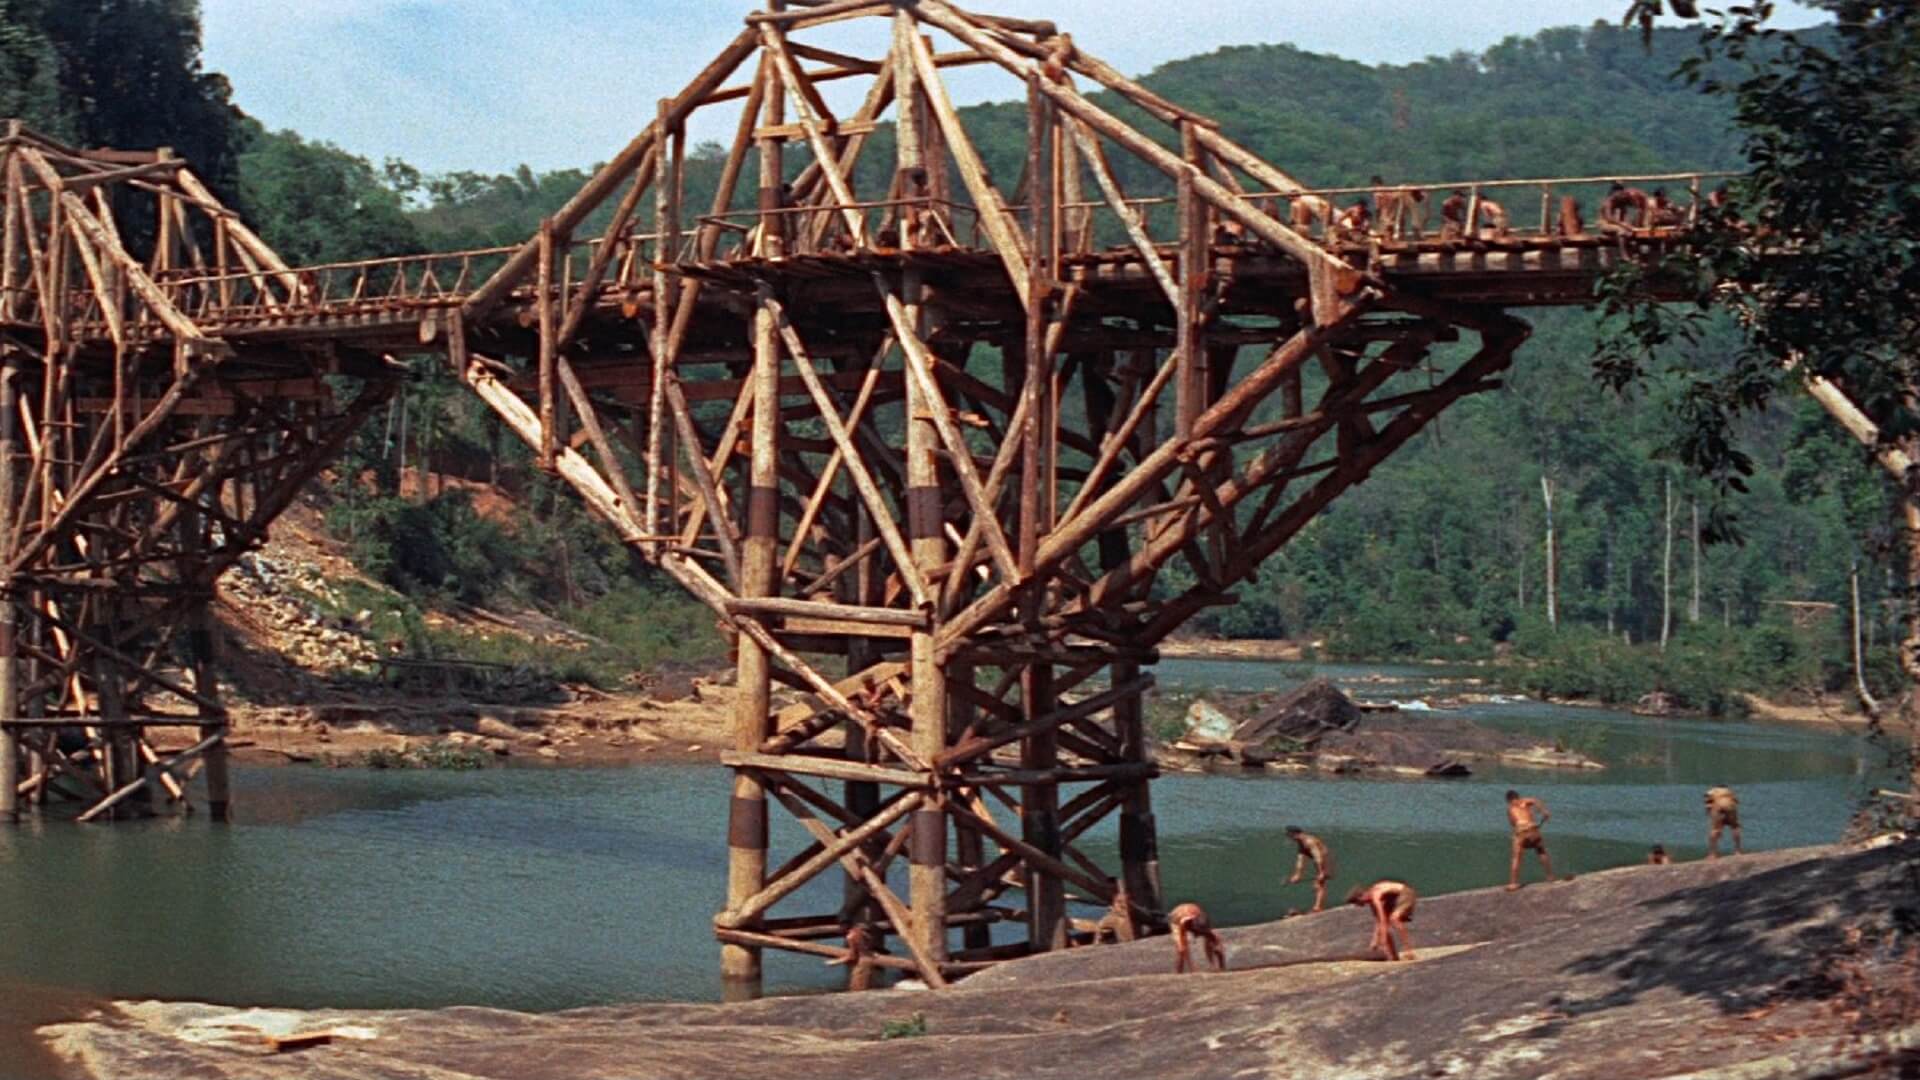 The Bridge on the River Kwai, Jacob Burns Film Center